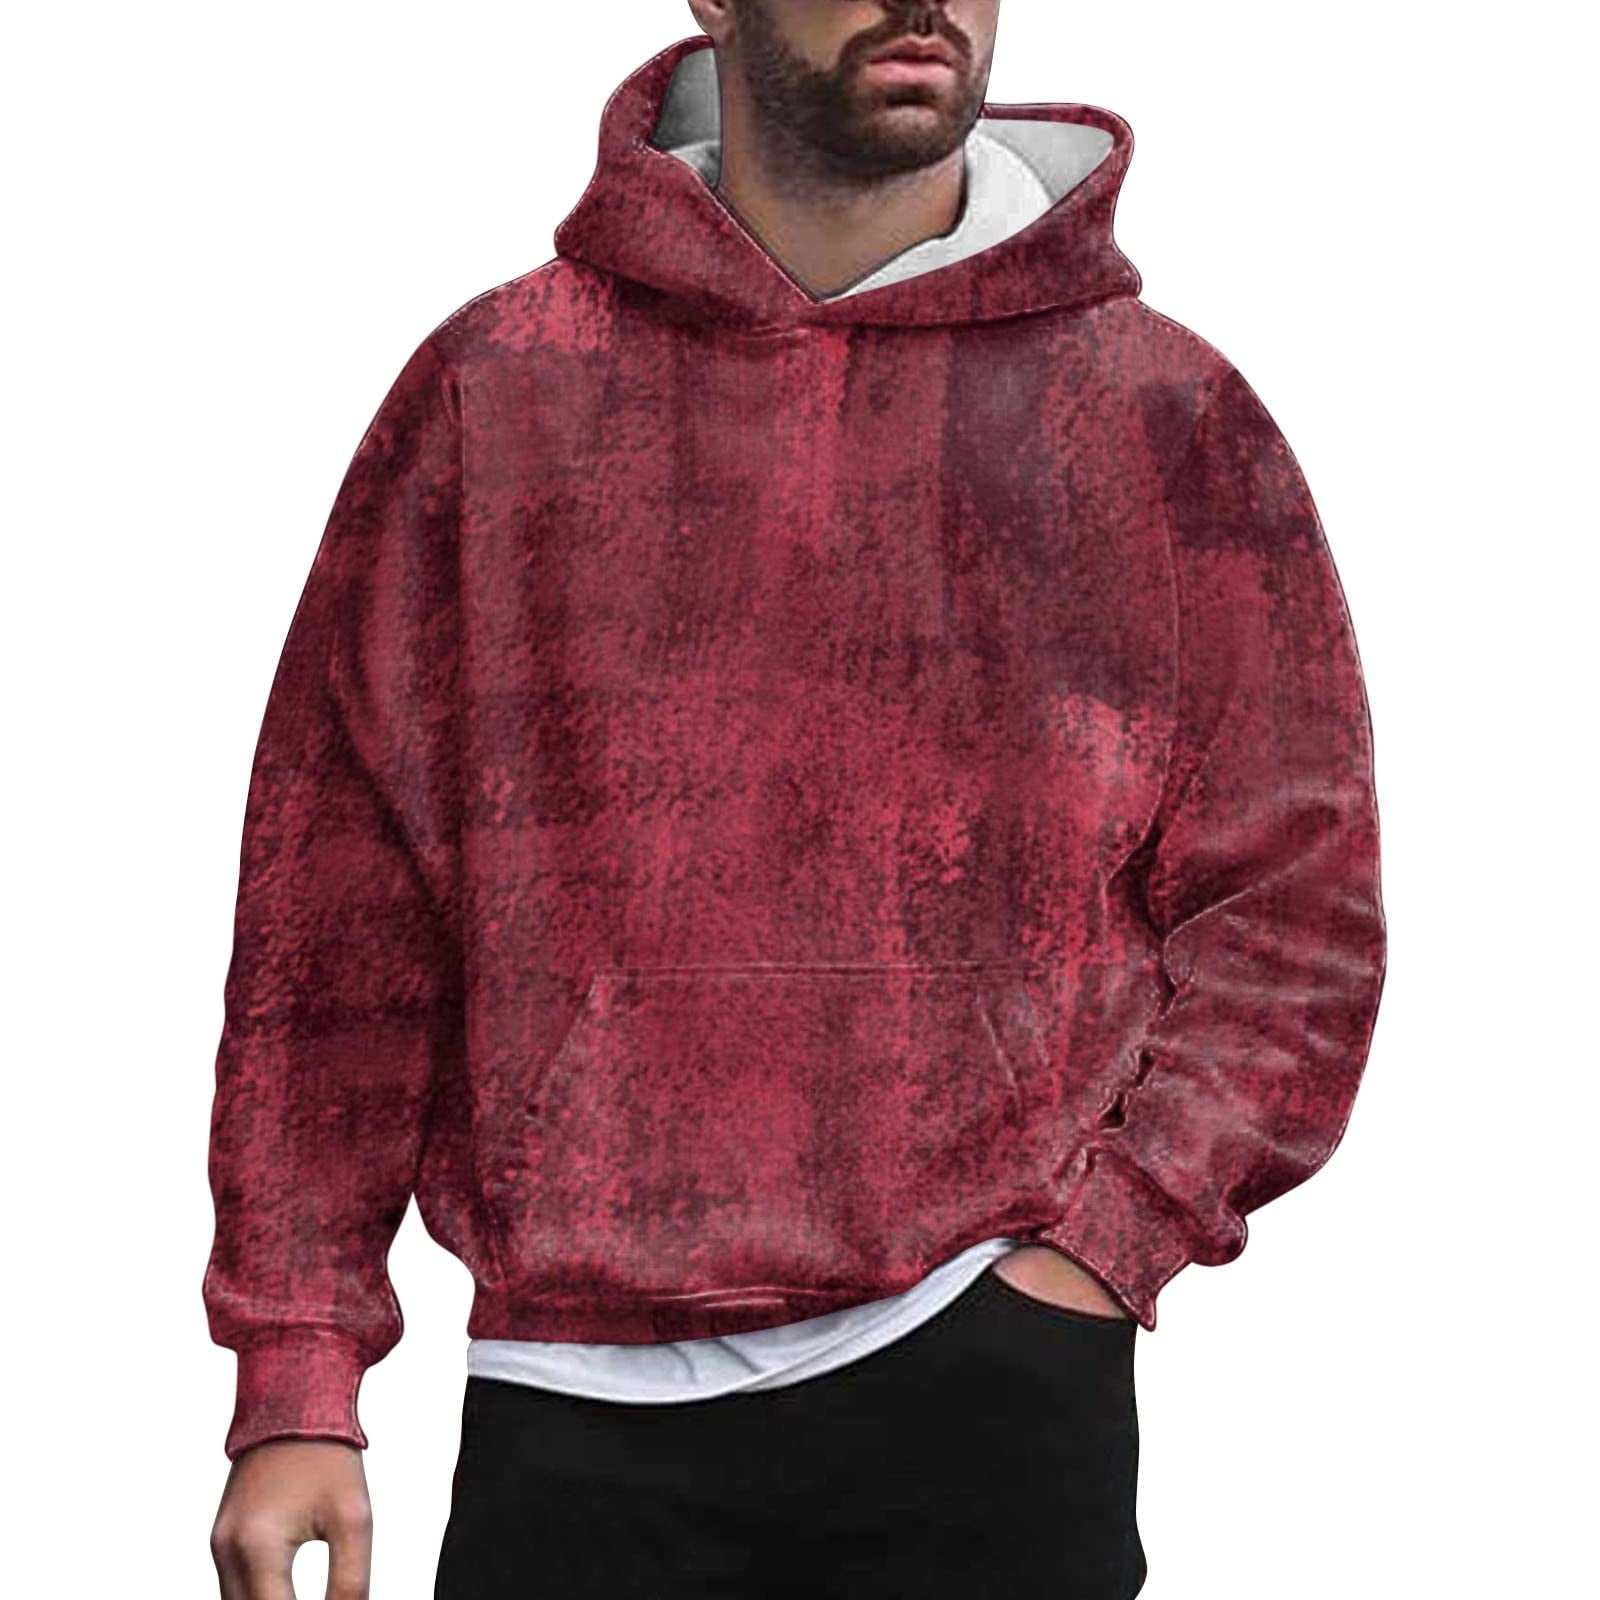 Comfy Hoodies Men Vintage Casual Hoodie with Pocket Fashion Hooded Sweatshirt  Pullover Sweater Tops Activewear 